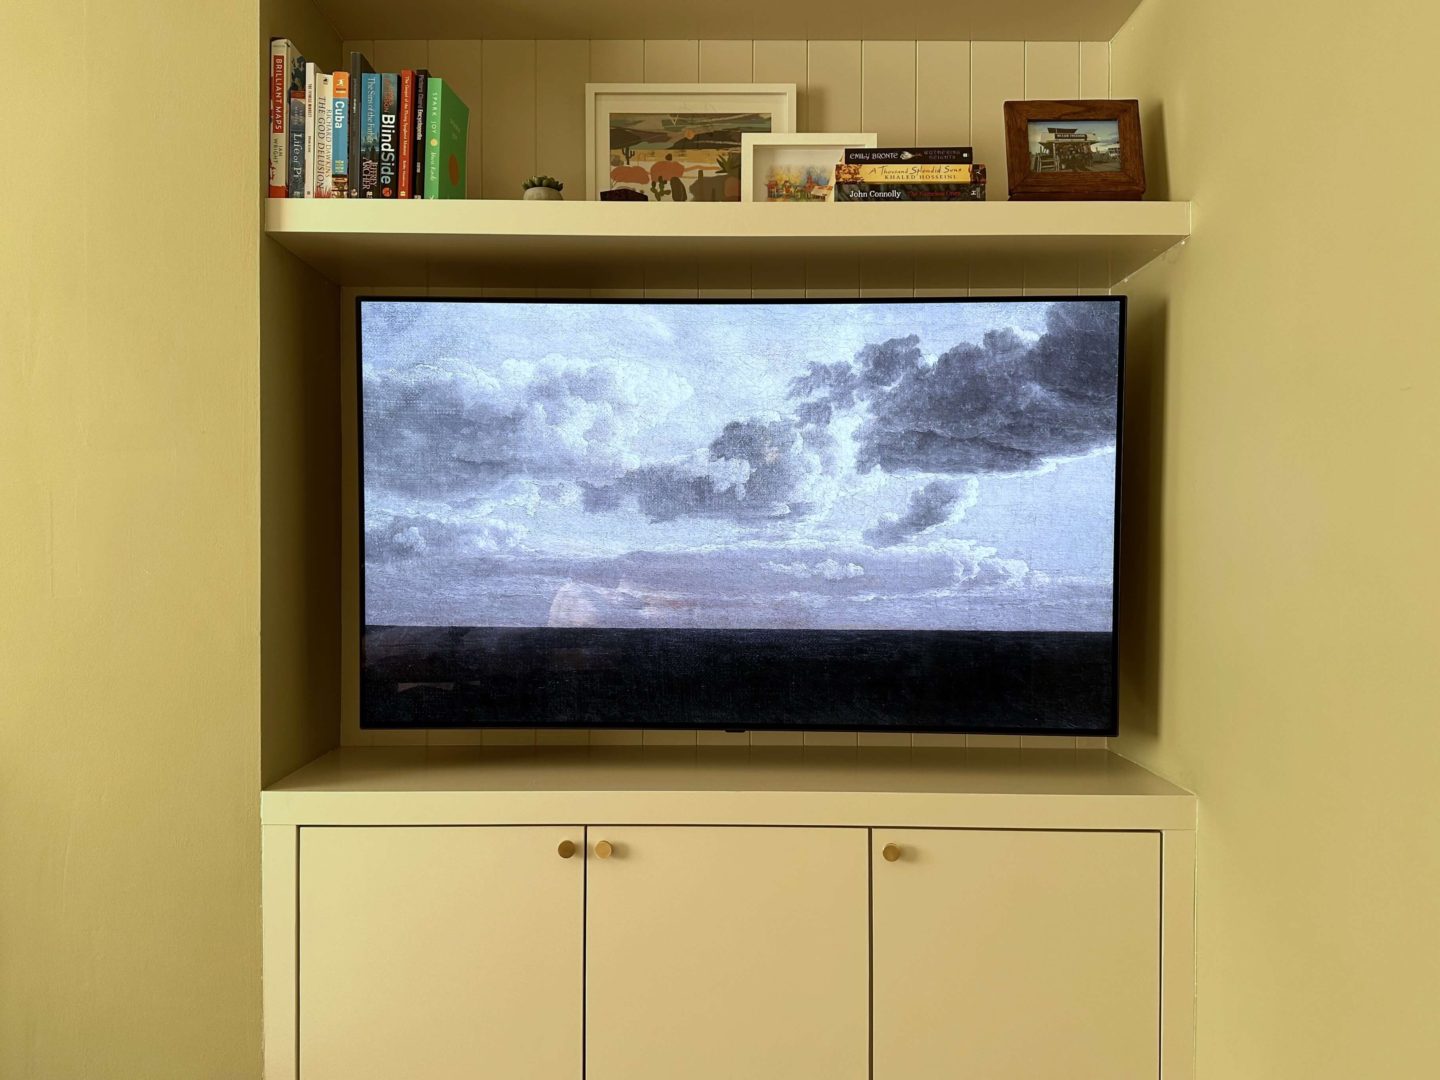 Tv artwork of a vintage coastal scene.